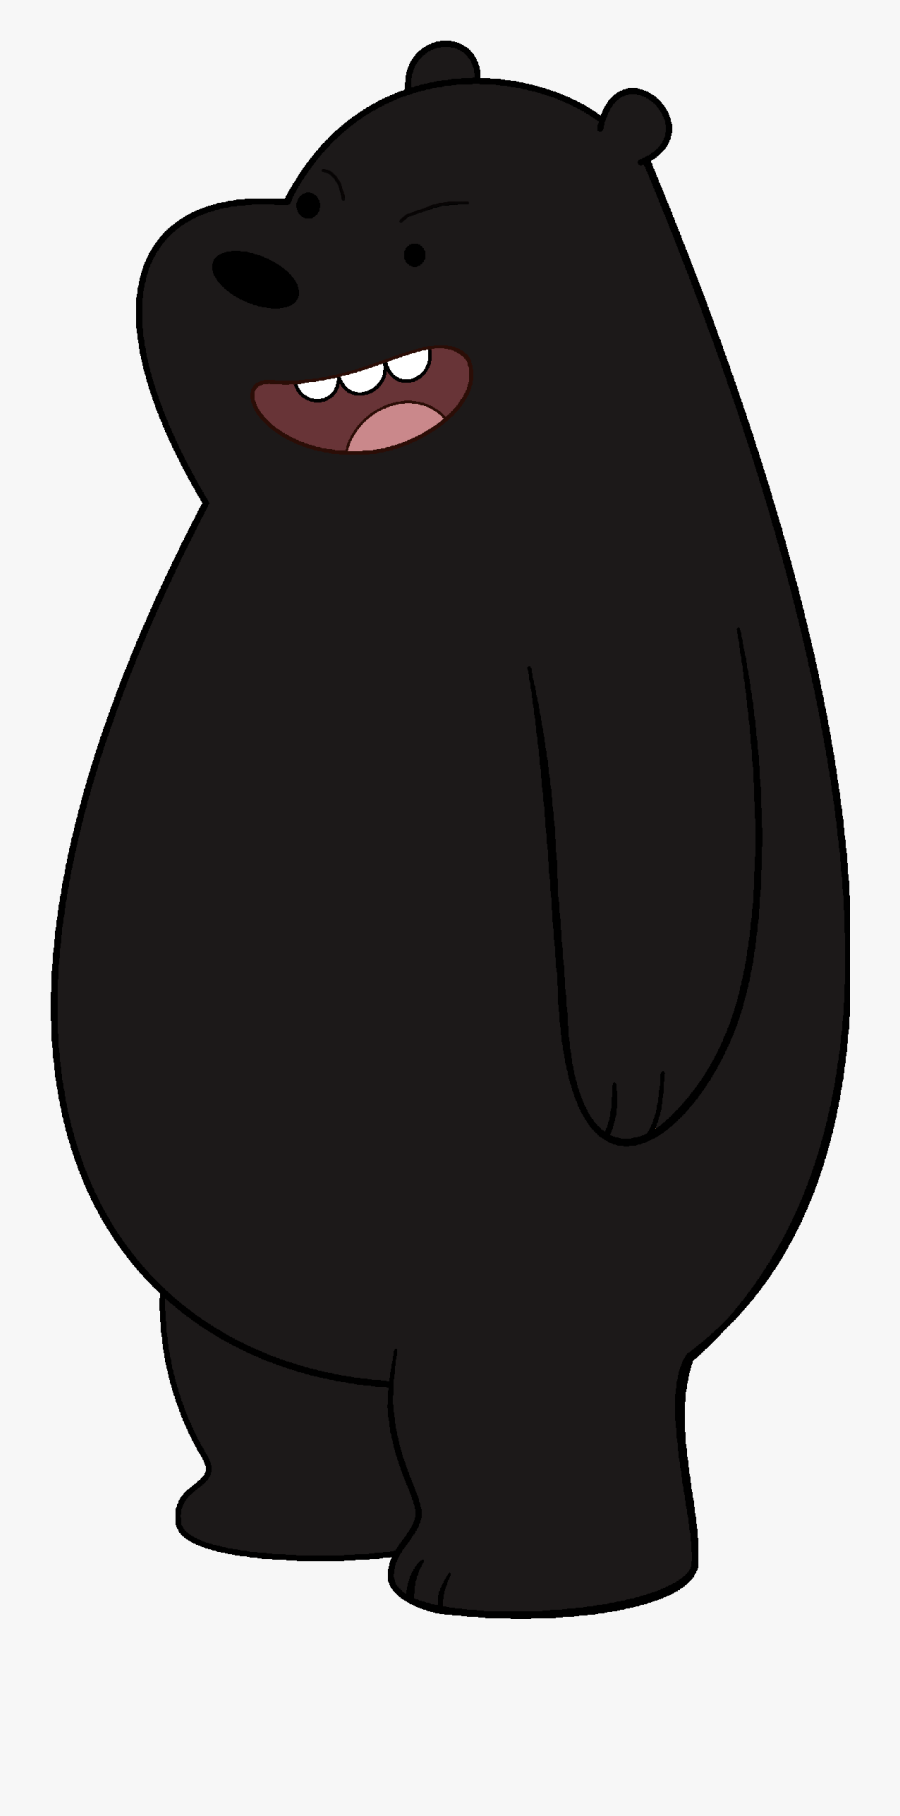 Black Bear Cartoon - Cartoon Black Bear Png, Transparent Clipart